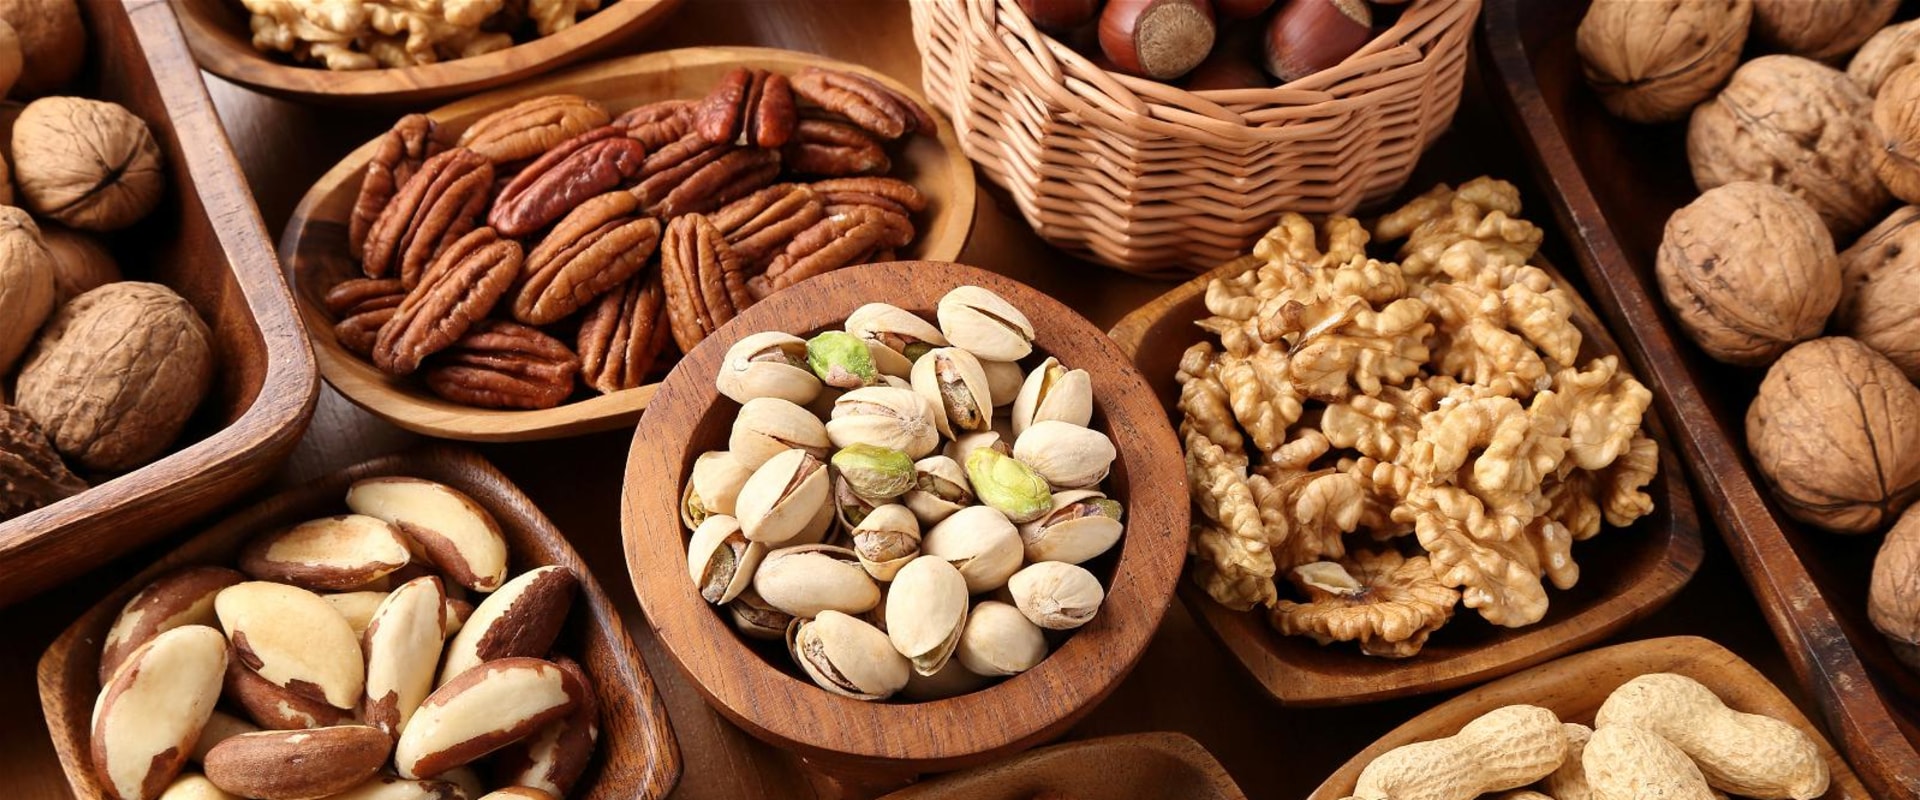 Nuts: An In-Depth Look